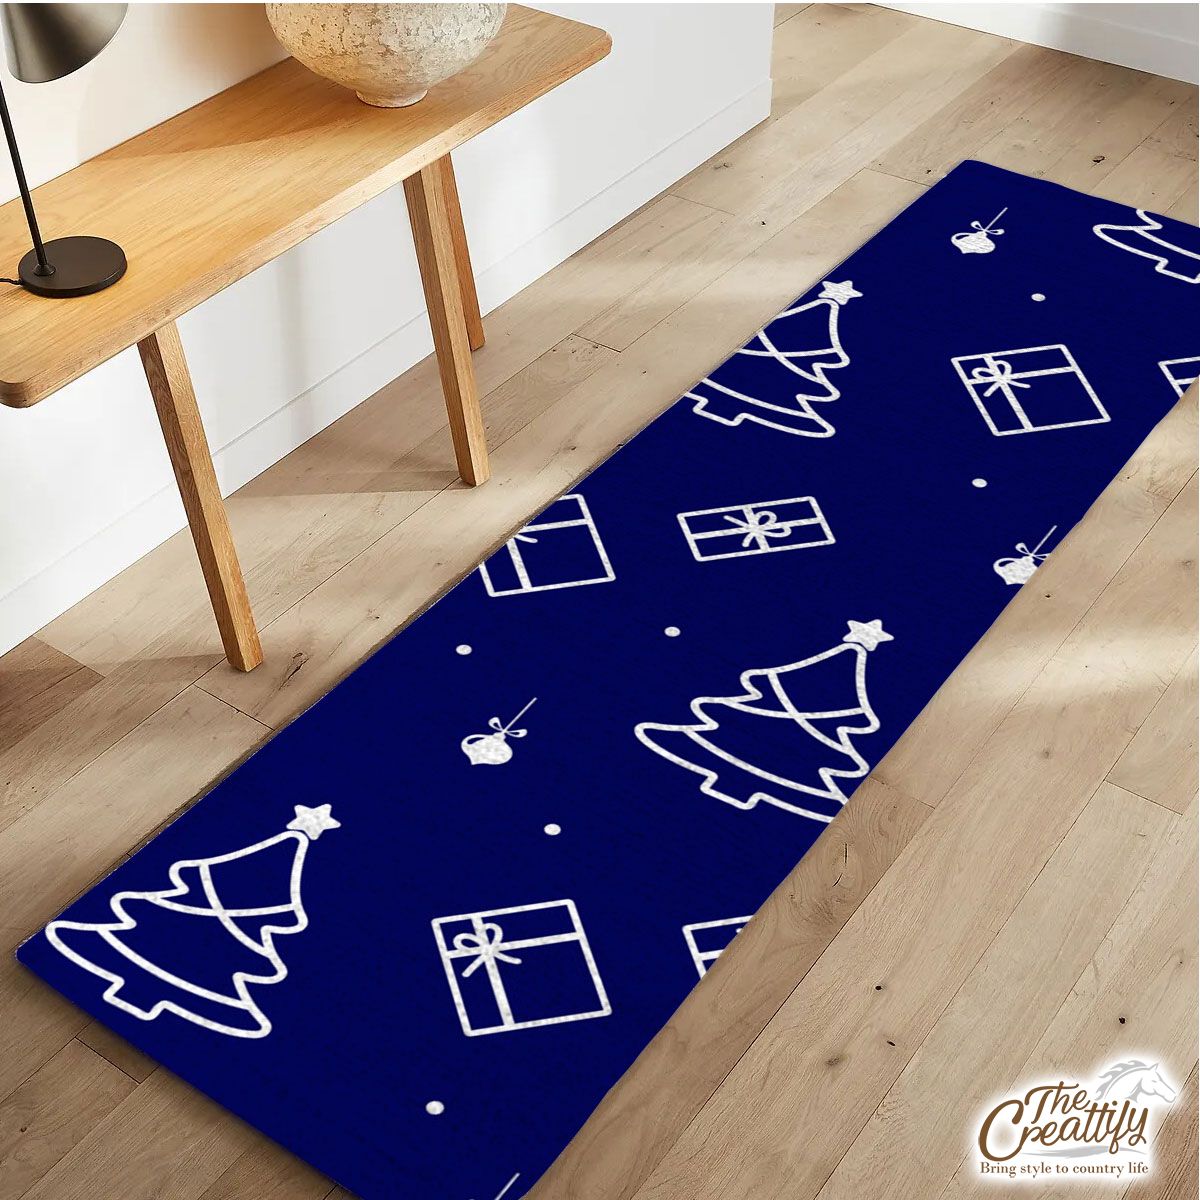 Blue And White Christmas Tree, Christmas Gift, Christmas Ball Runner Carpet